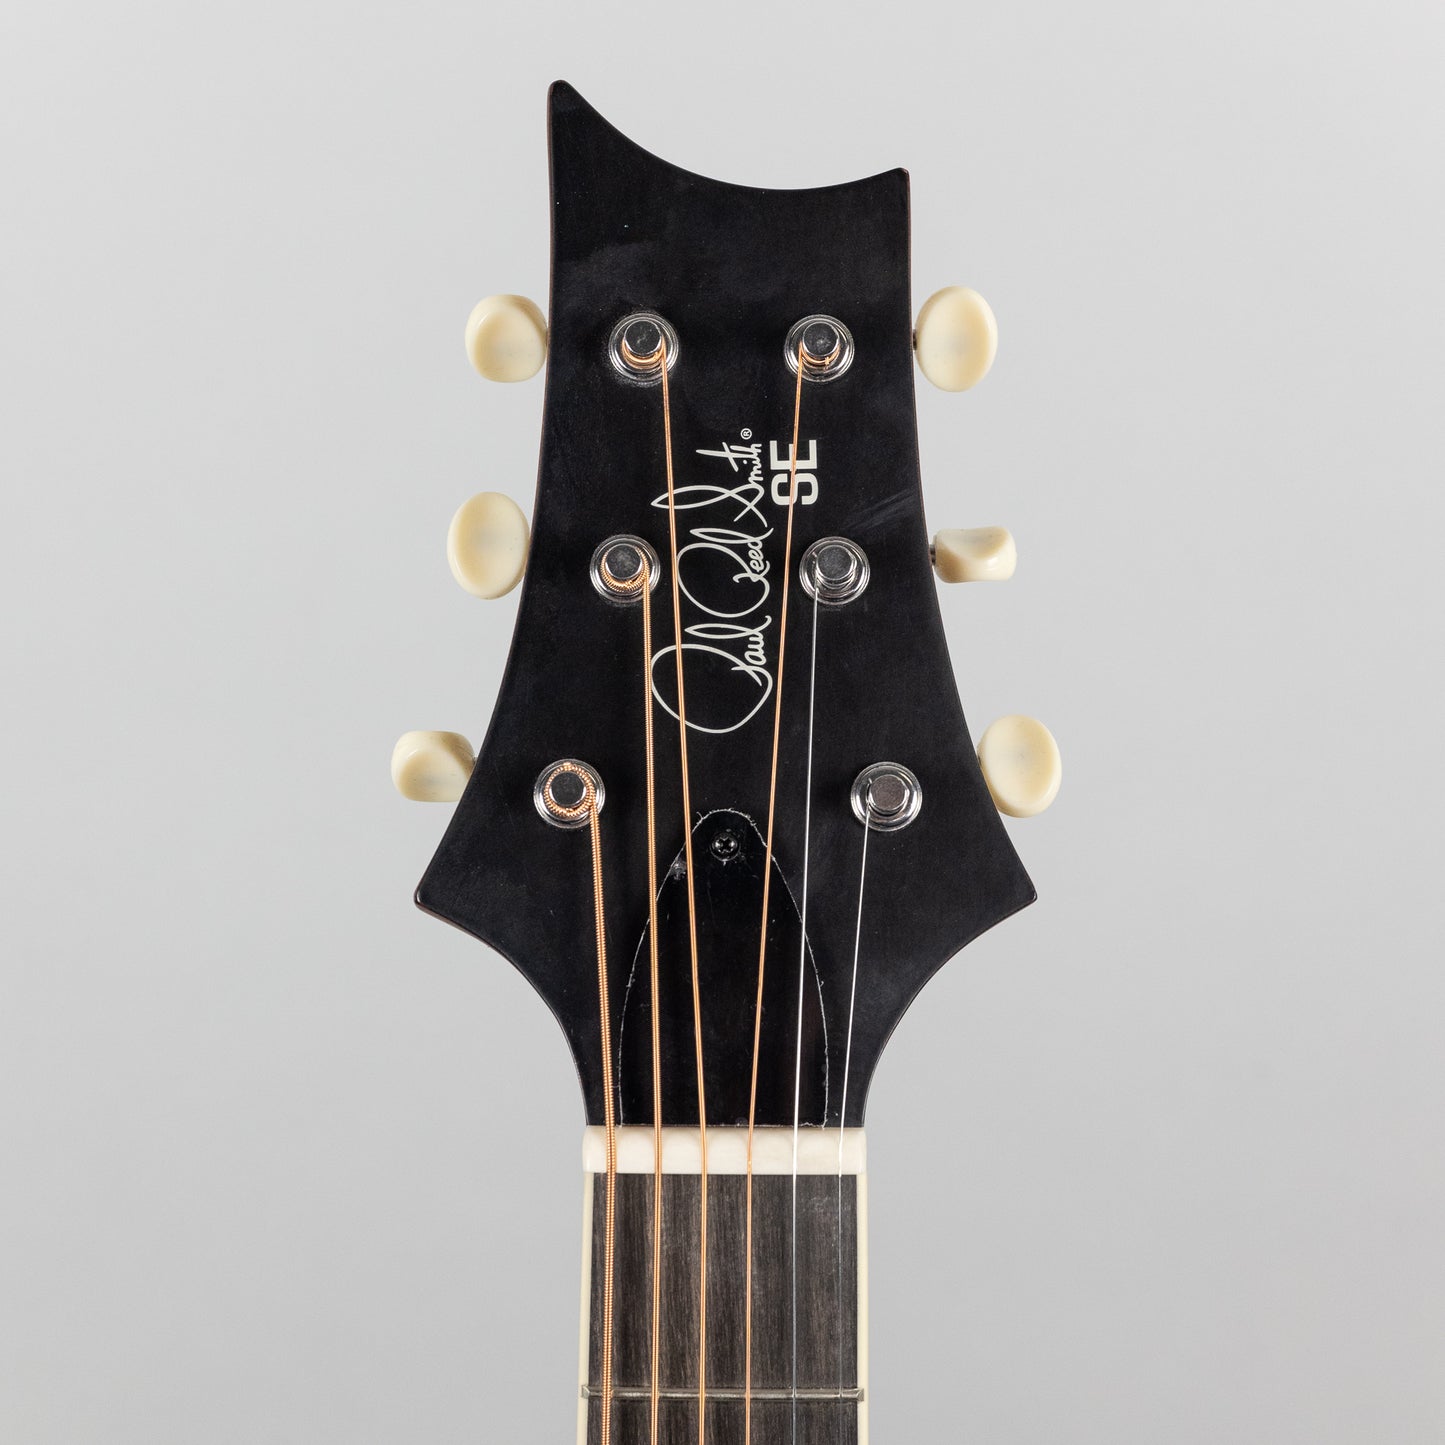 Paul Reed Smith SE P20E Tonare Parlor Acoustic in Black (E21778)